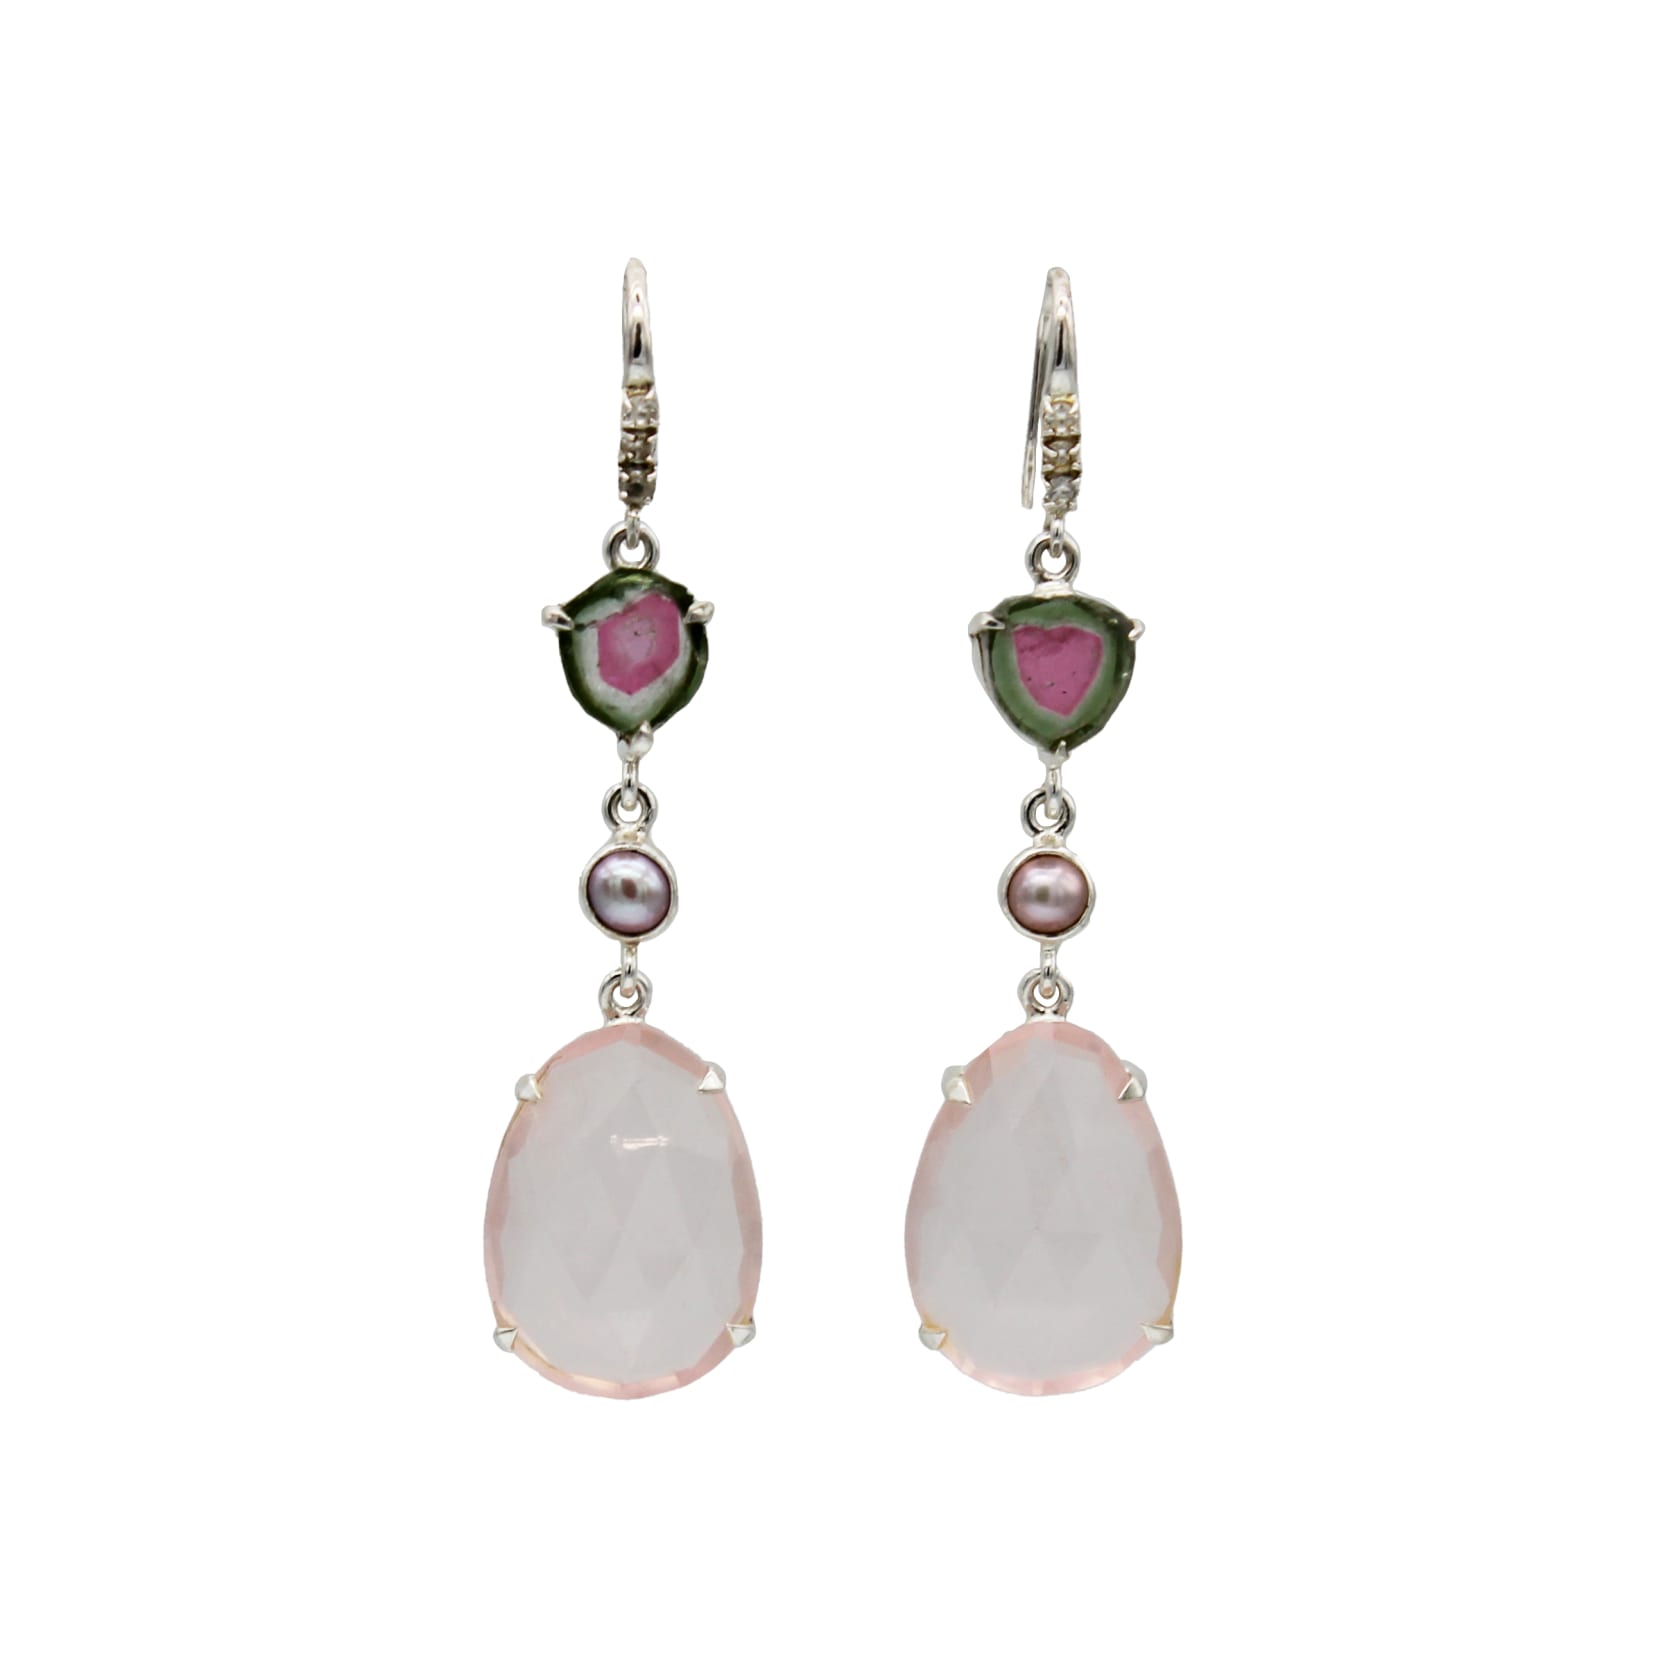 Thelena Hook Earrings – Tourmaline, Pearl And Rose Quartz